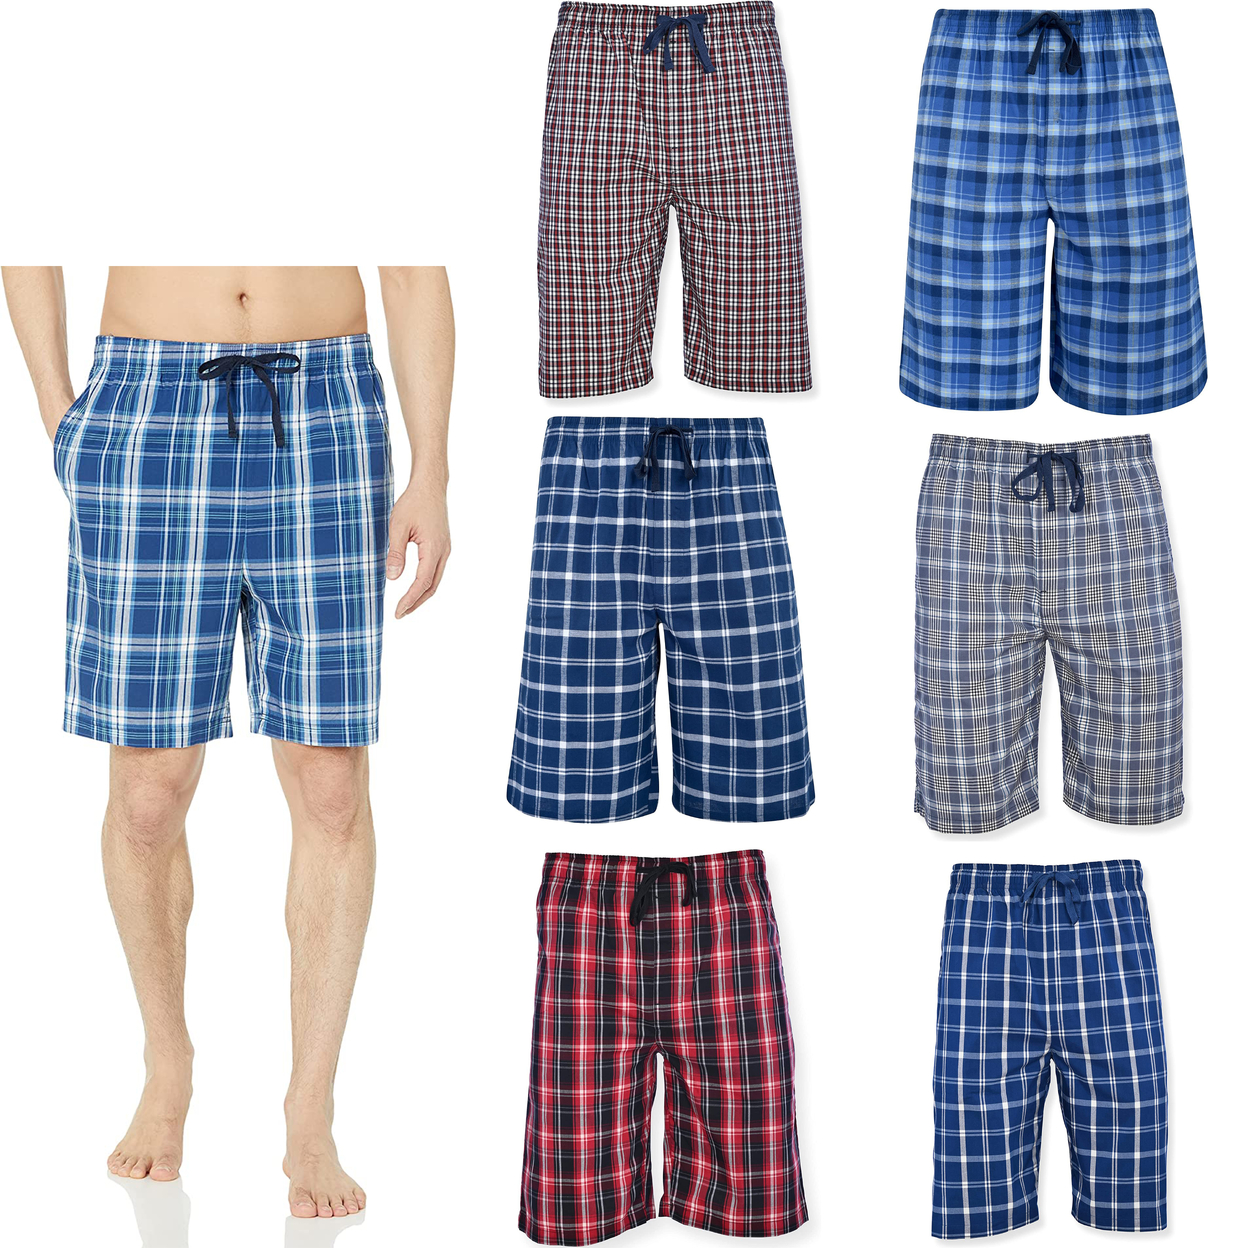 2-Pack: Men's Ultra Soft Plaid Lounge Pajama Sleep Wear Shorts - Black & Tan, X-large